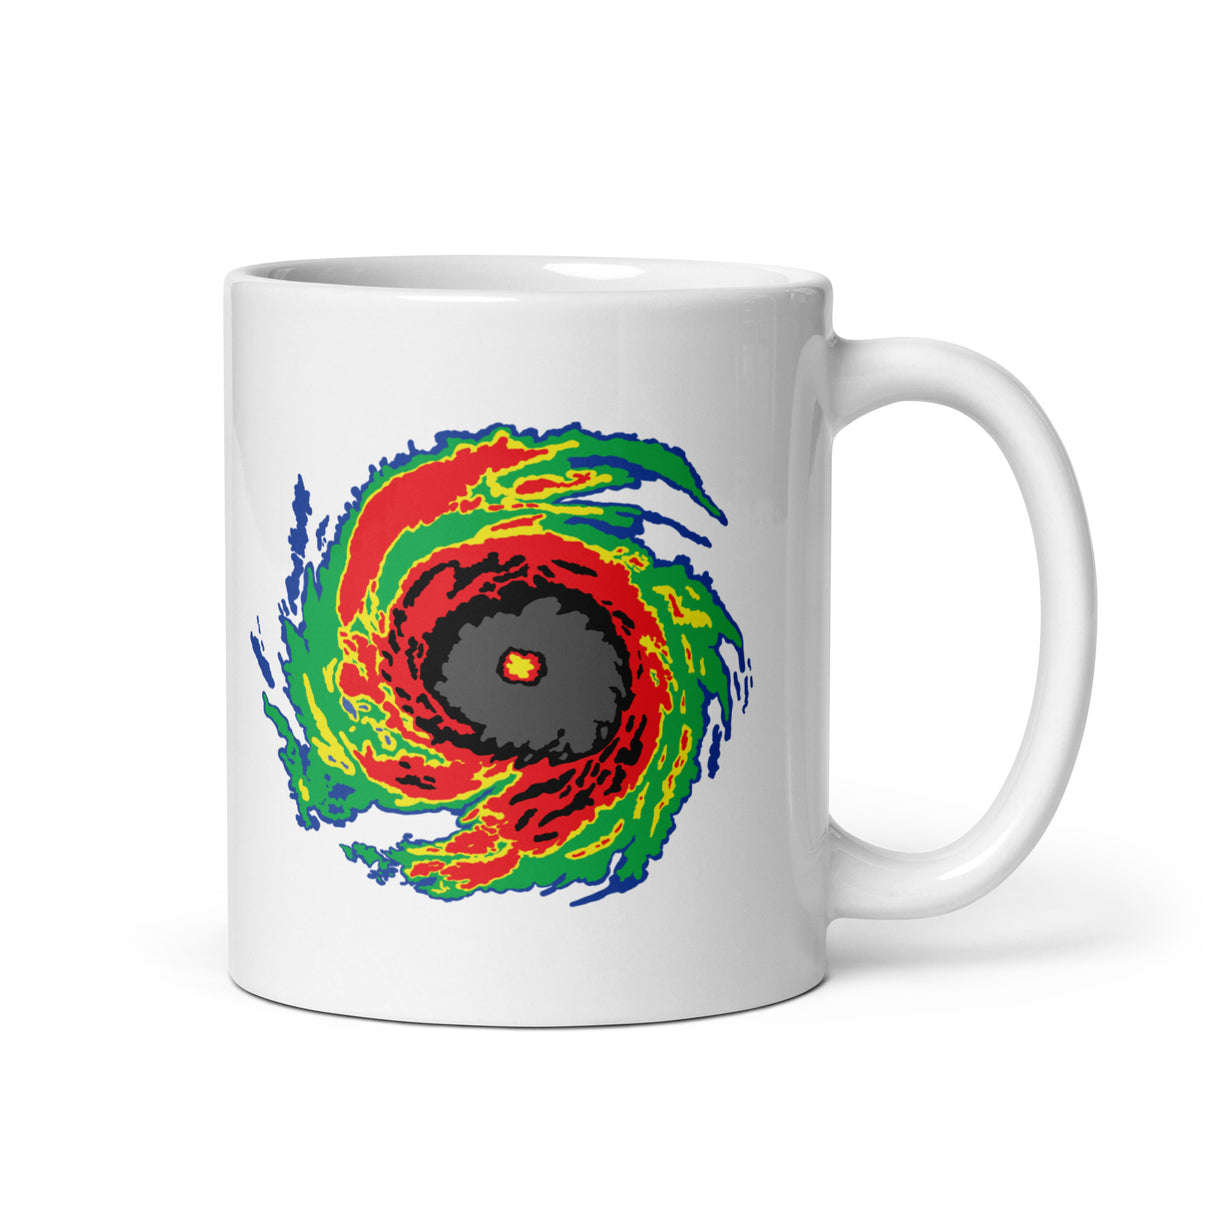 Hurricane White Glossy Mug